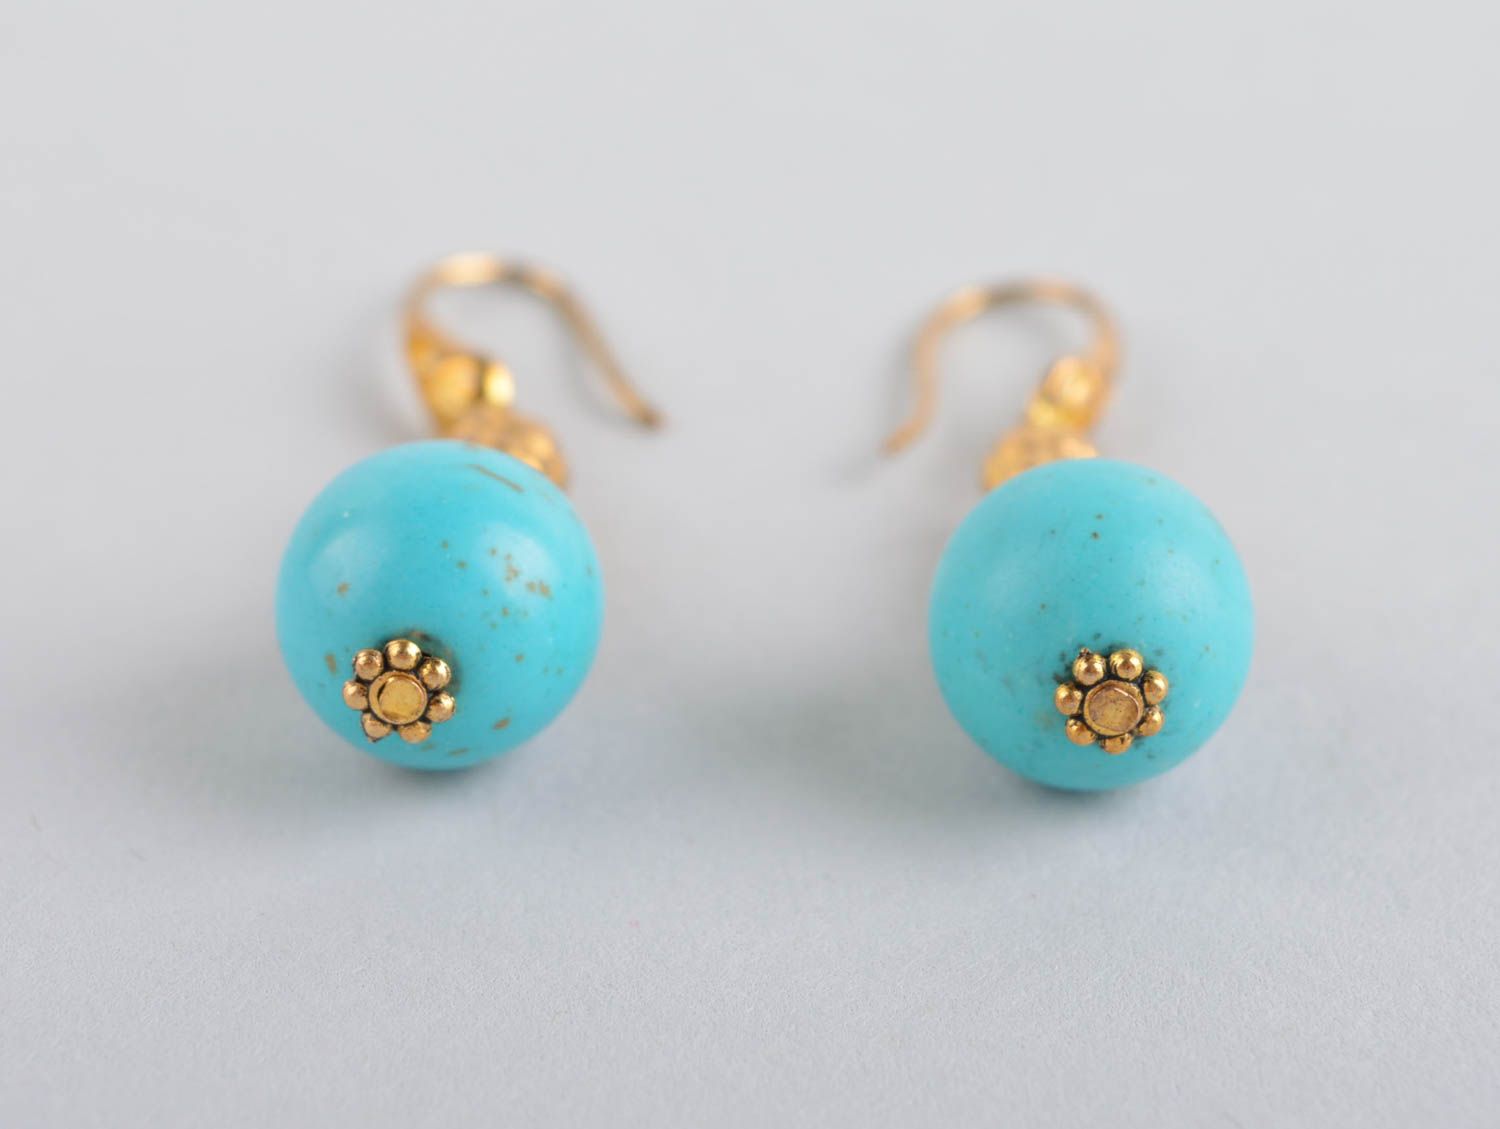 Handmade earrings designer jewelry turquoise earrings fashion accessories photo 4